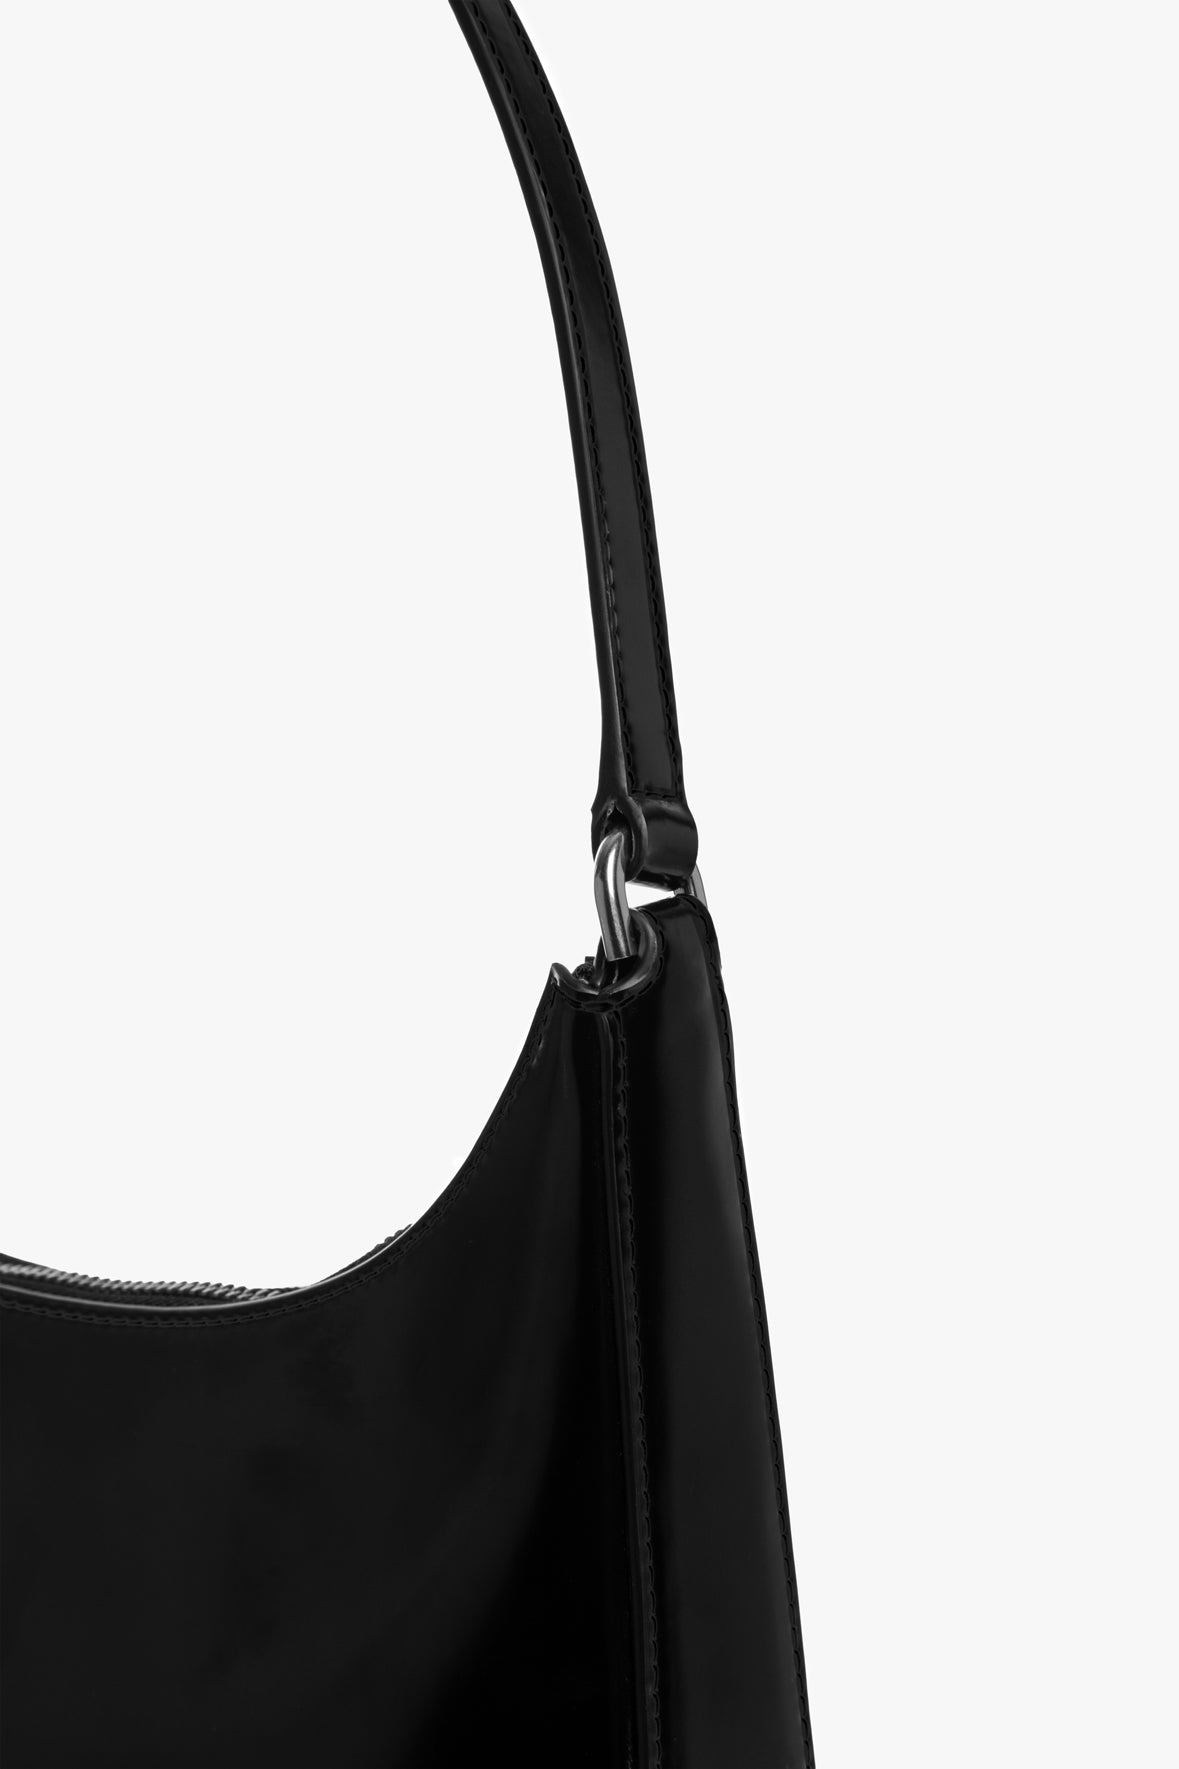 Staud - Women's Alec Shoulder Bag - Black - Leather